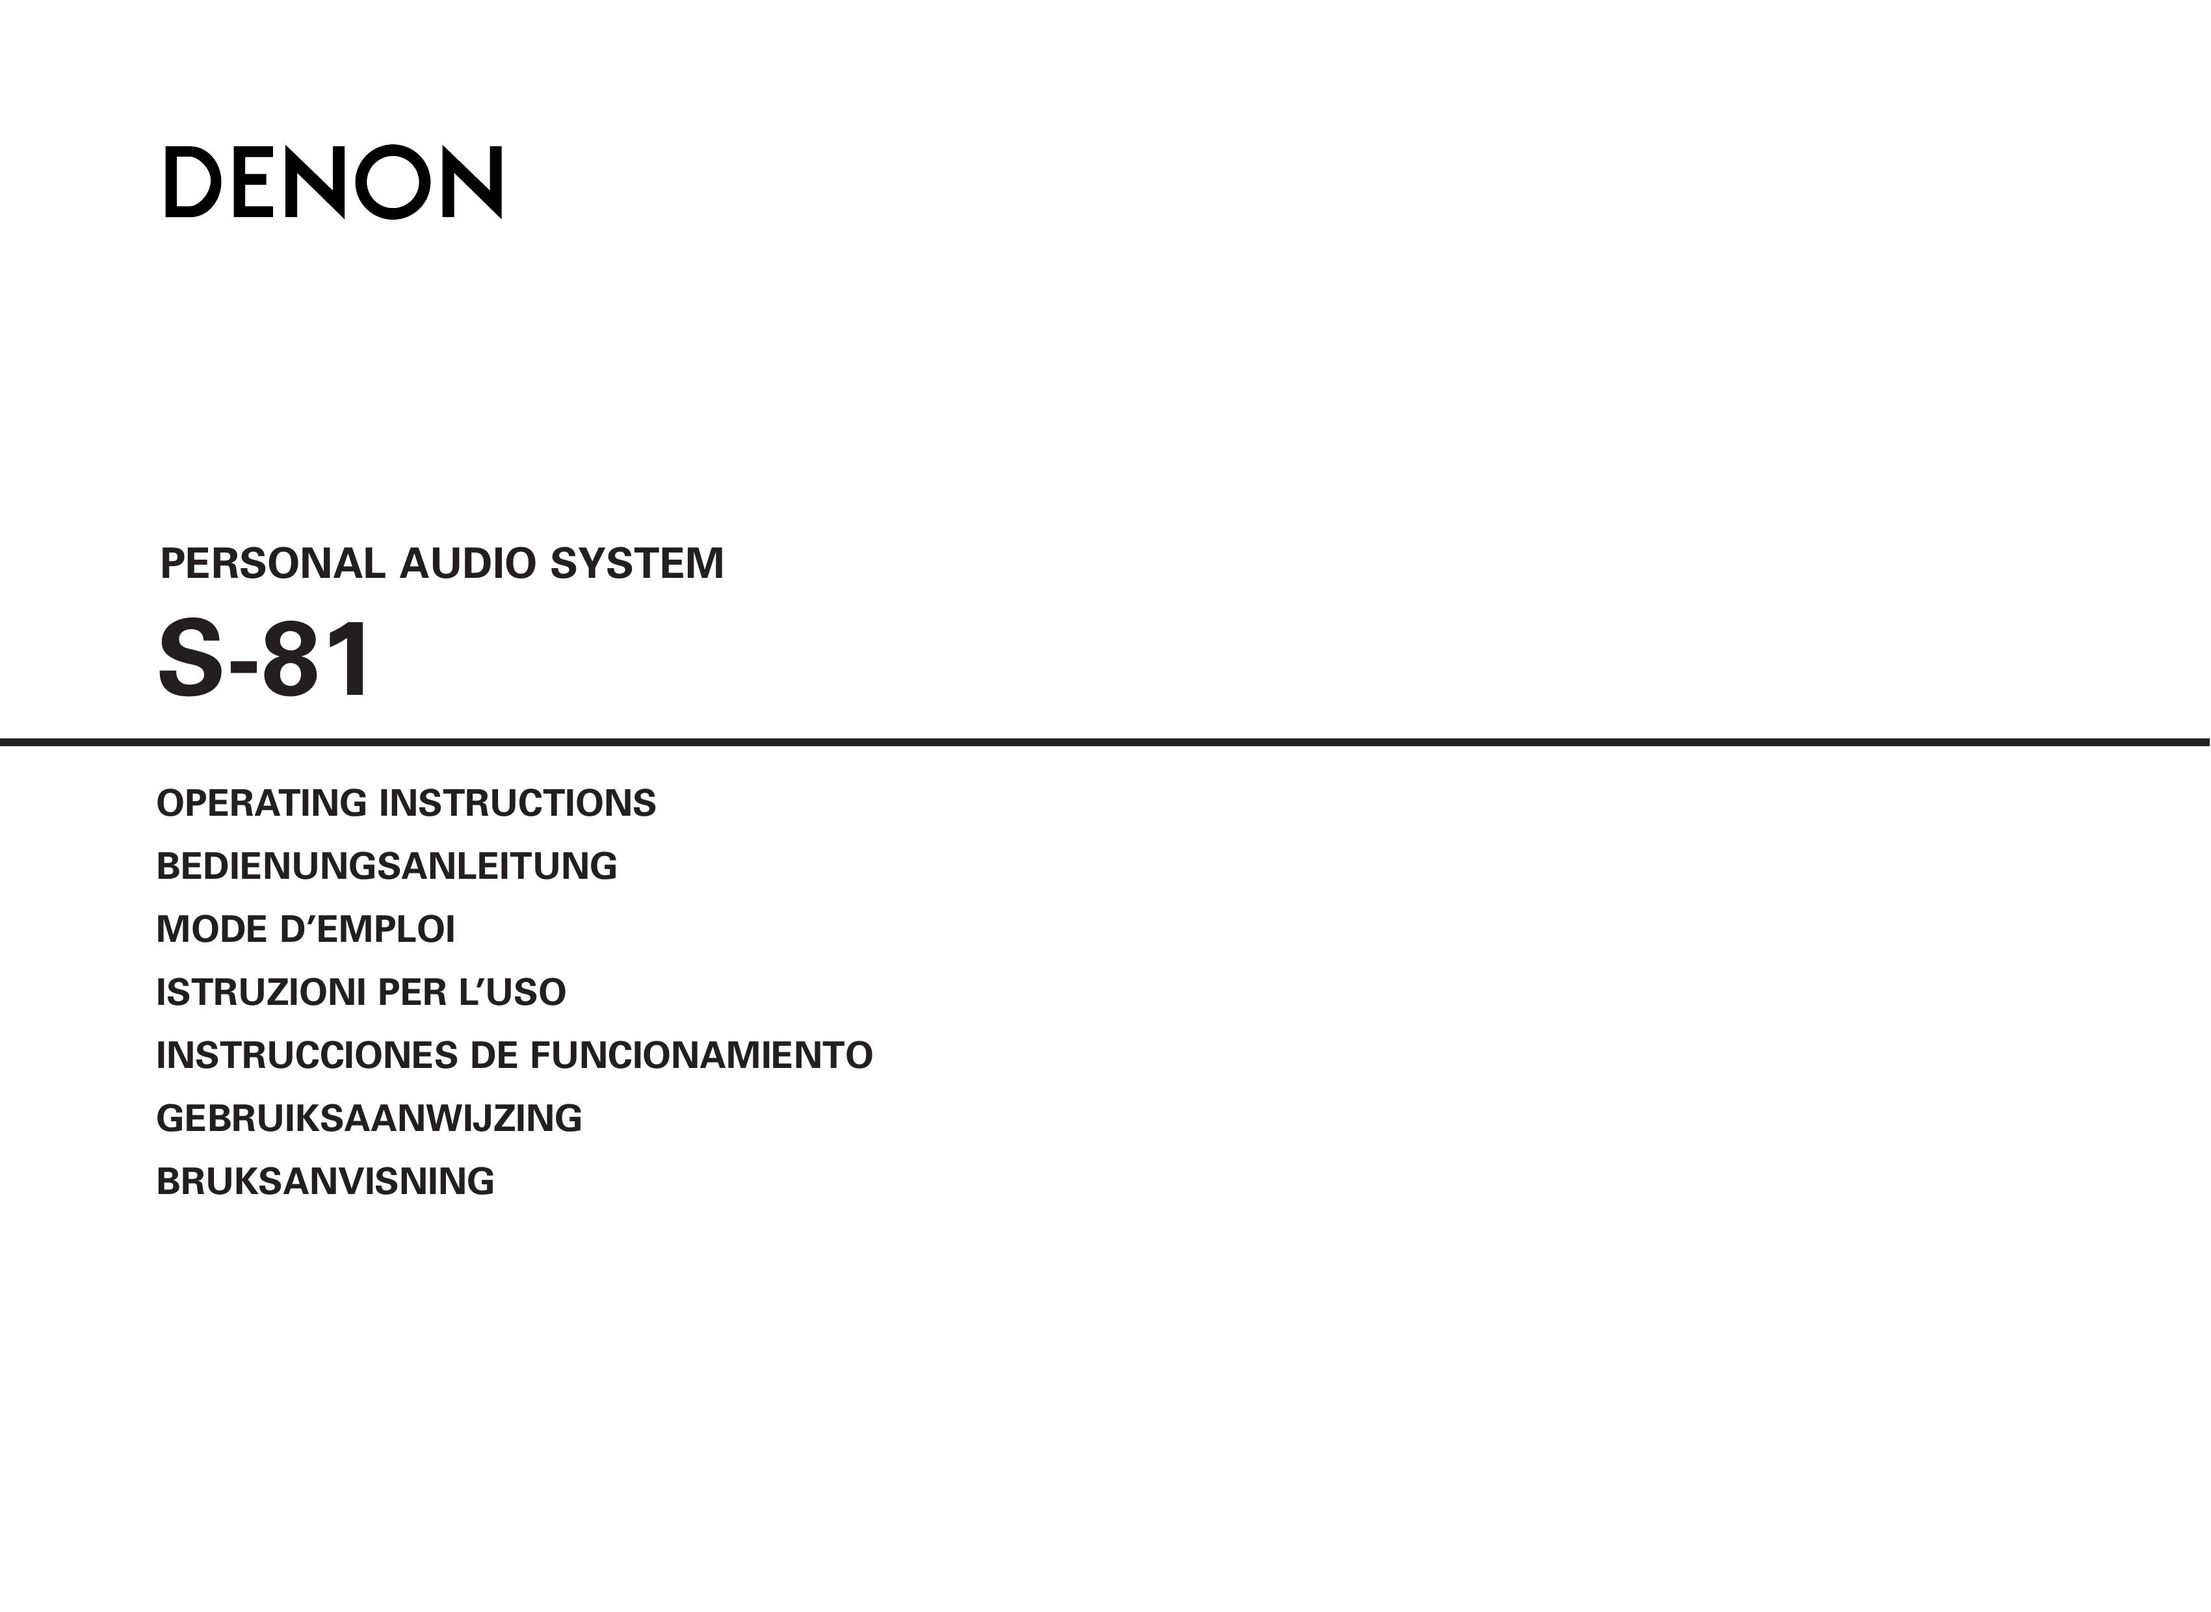 Denon S-81 Speaker System User Manual